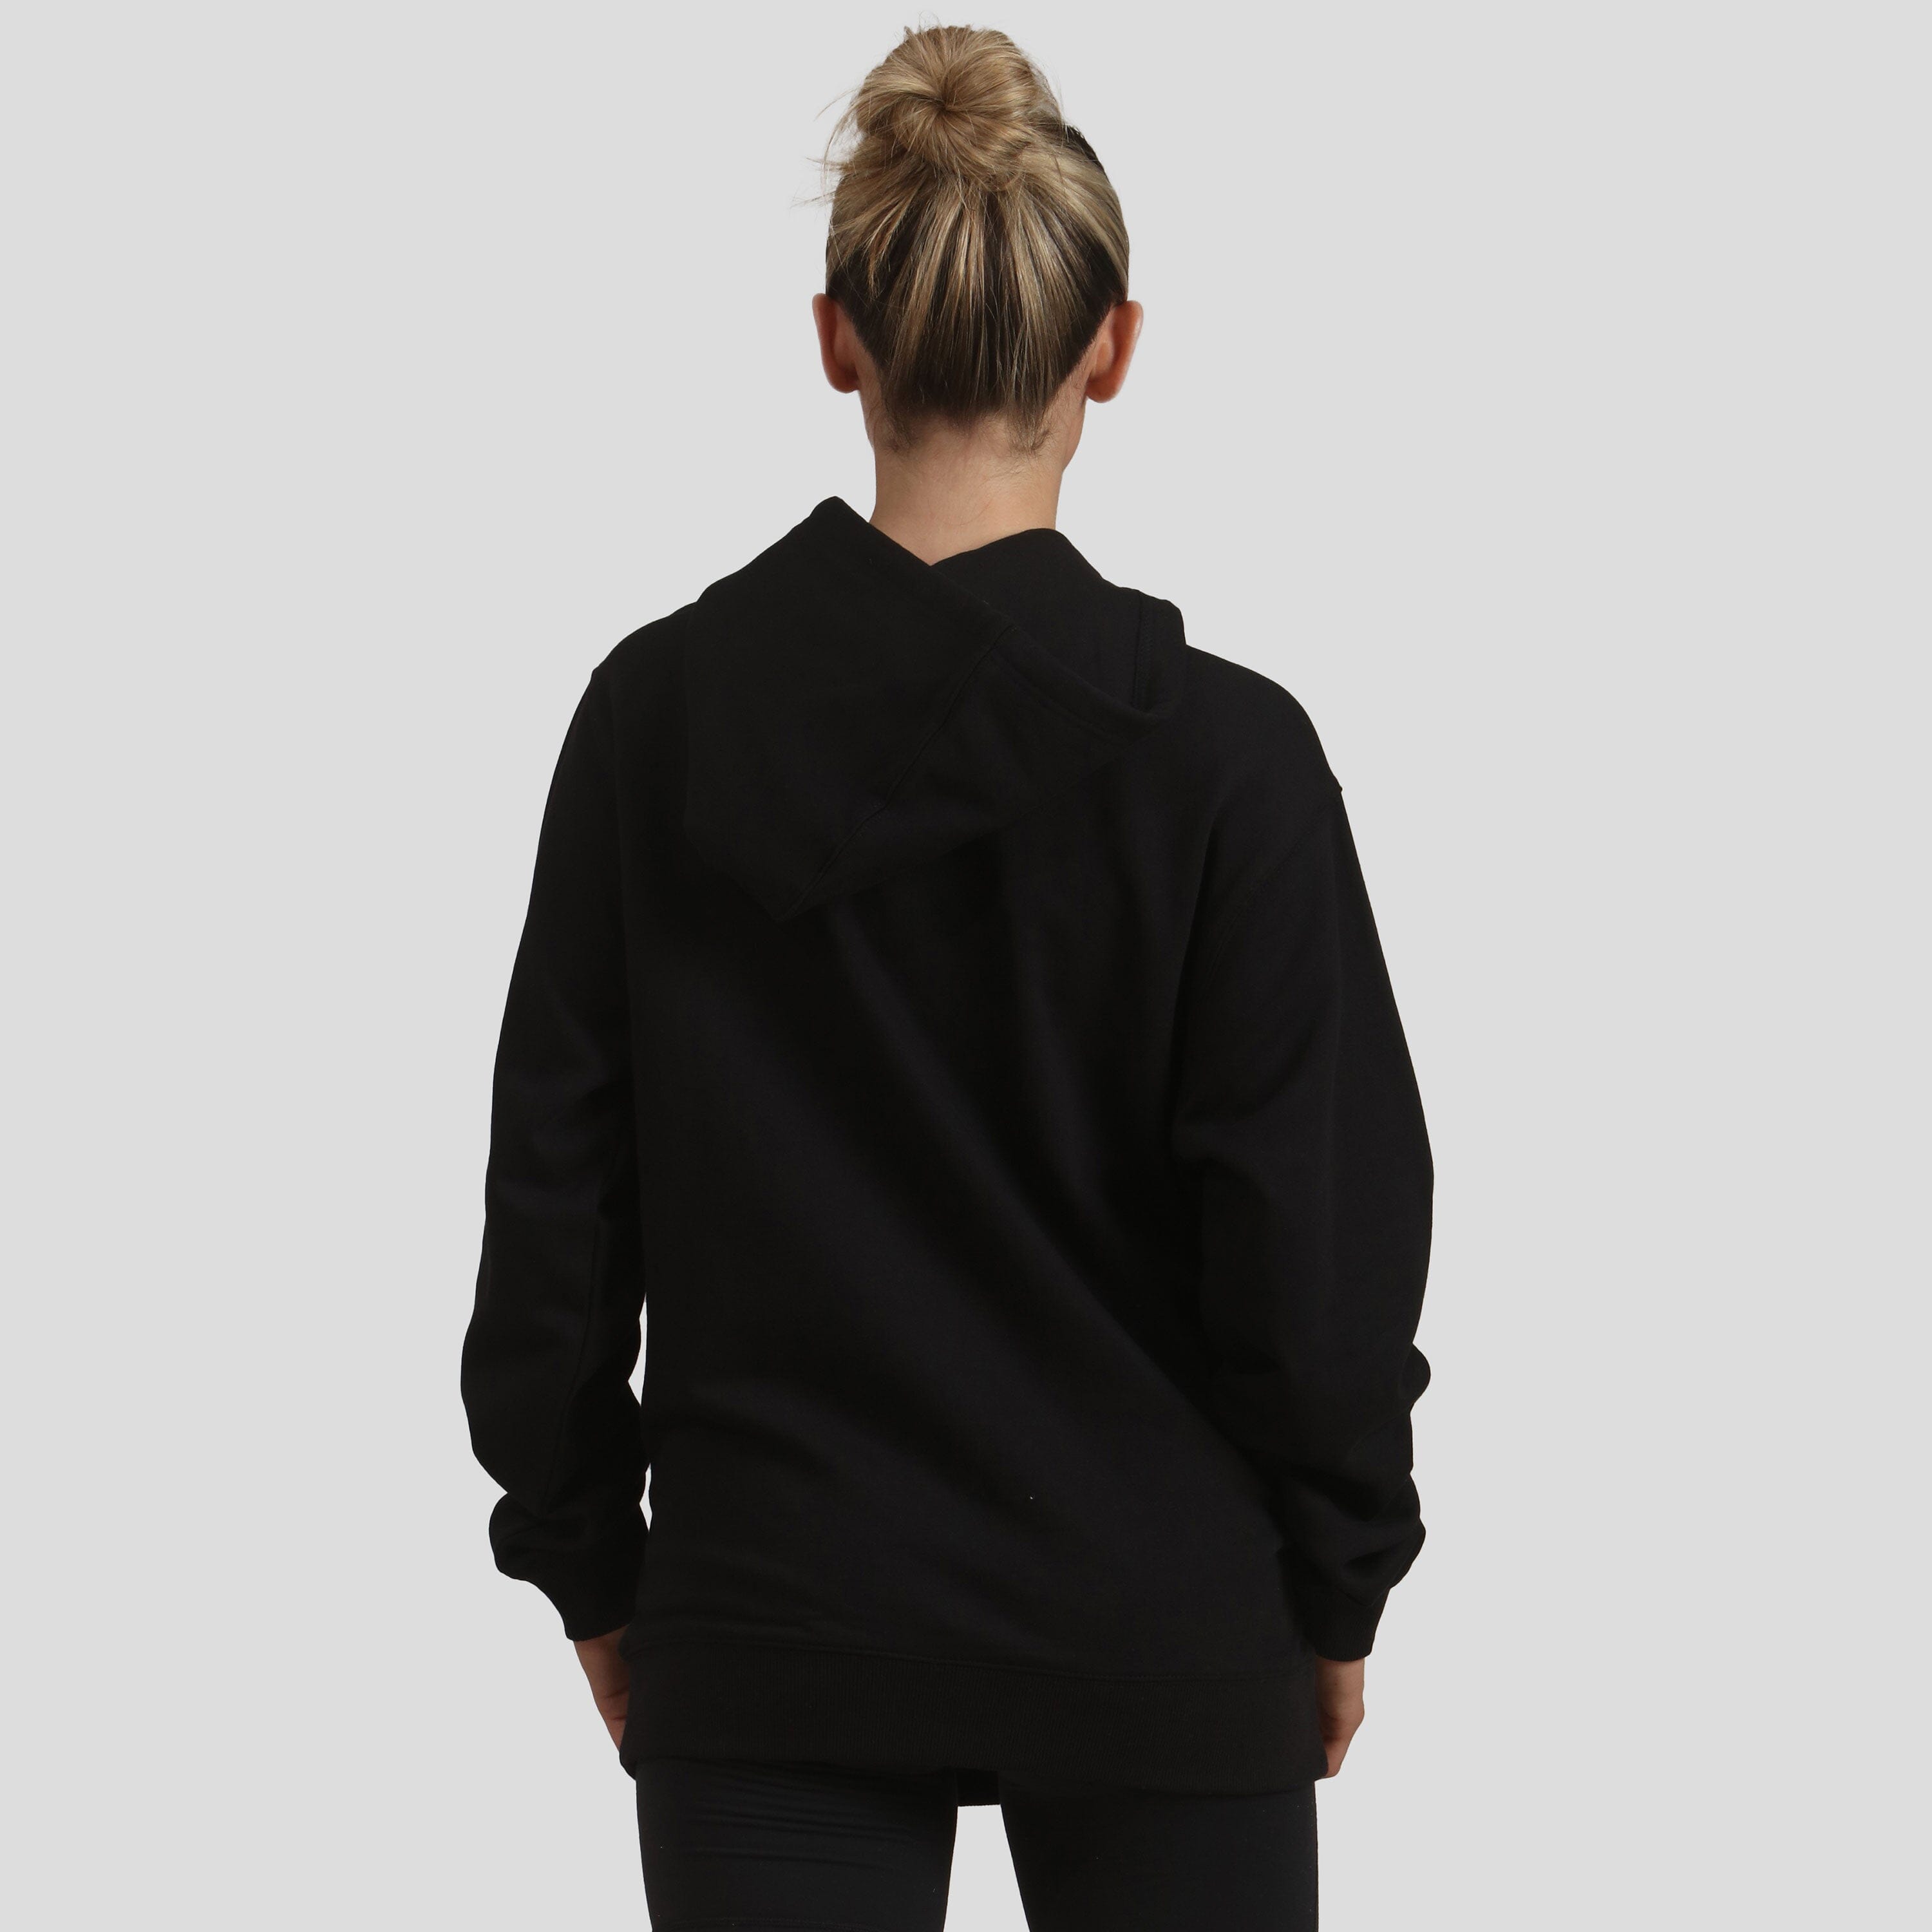 Members Only Women's Logan Oversized Hooded Sweatshirt - Black - 2X-Large